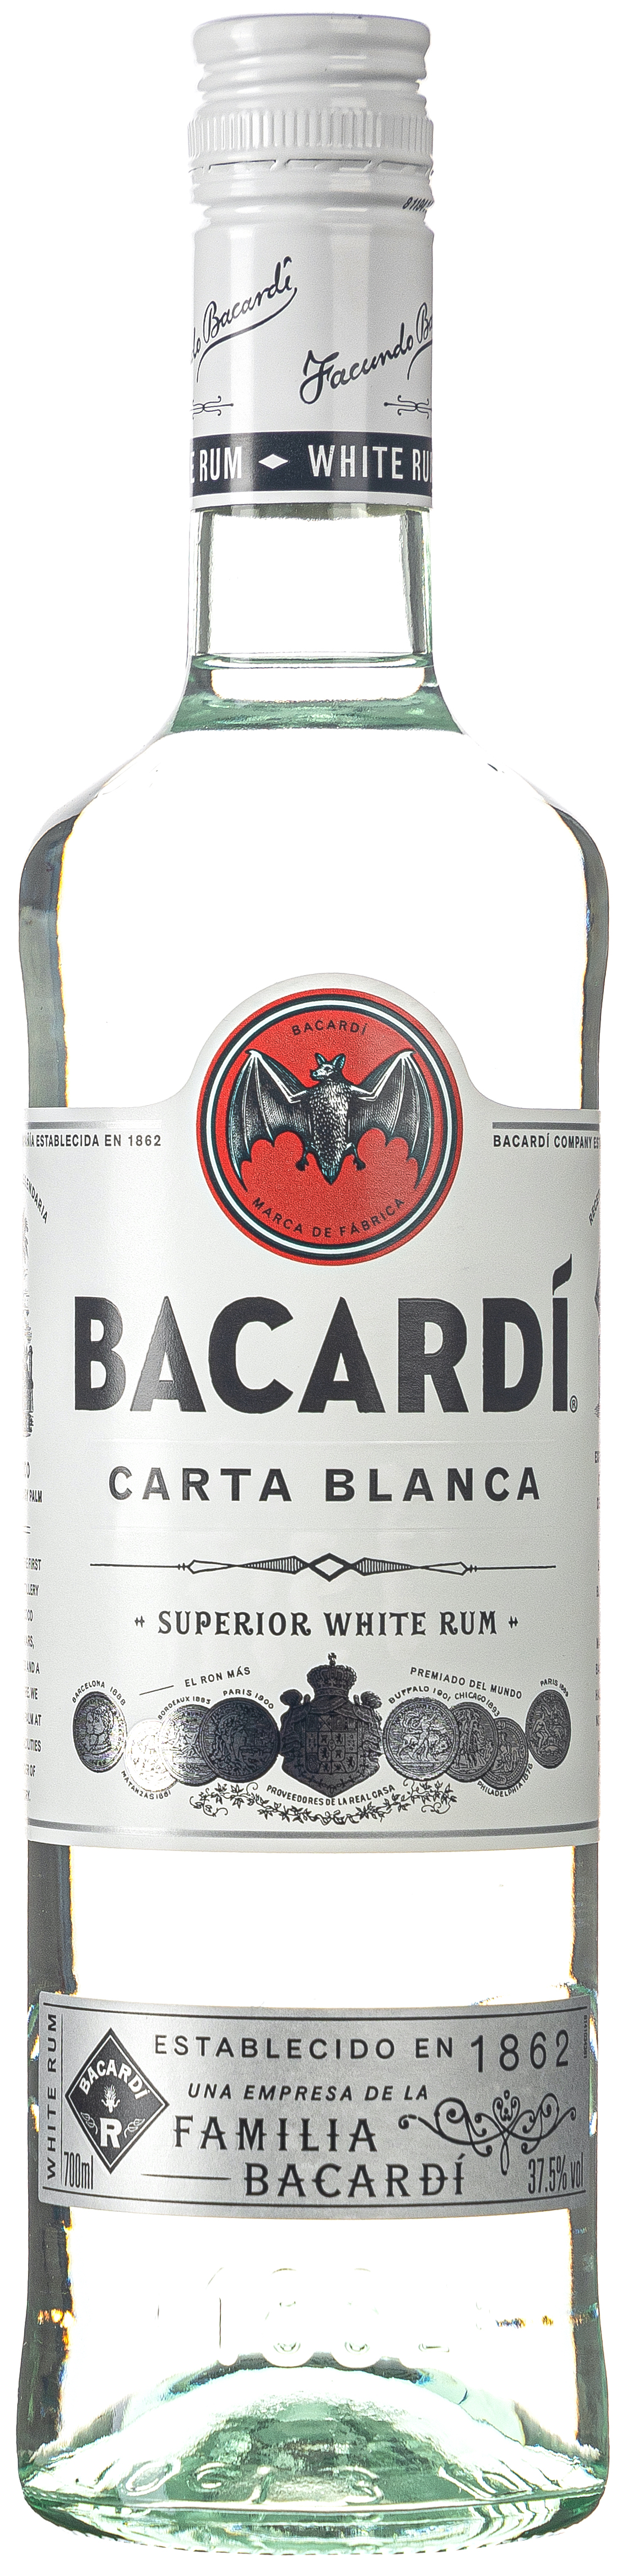 Bacardi Carta Blanca 37,5% L 0,7